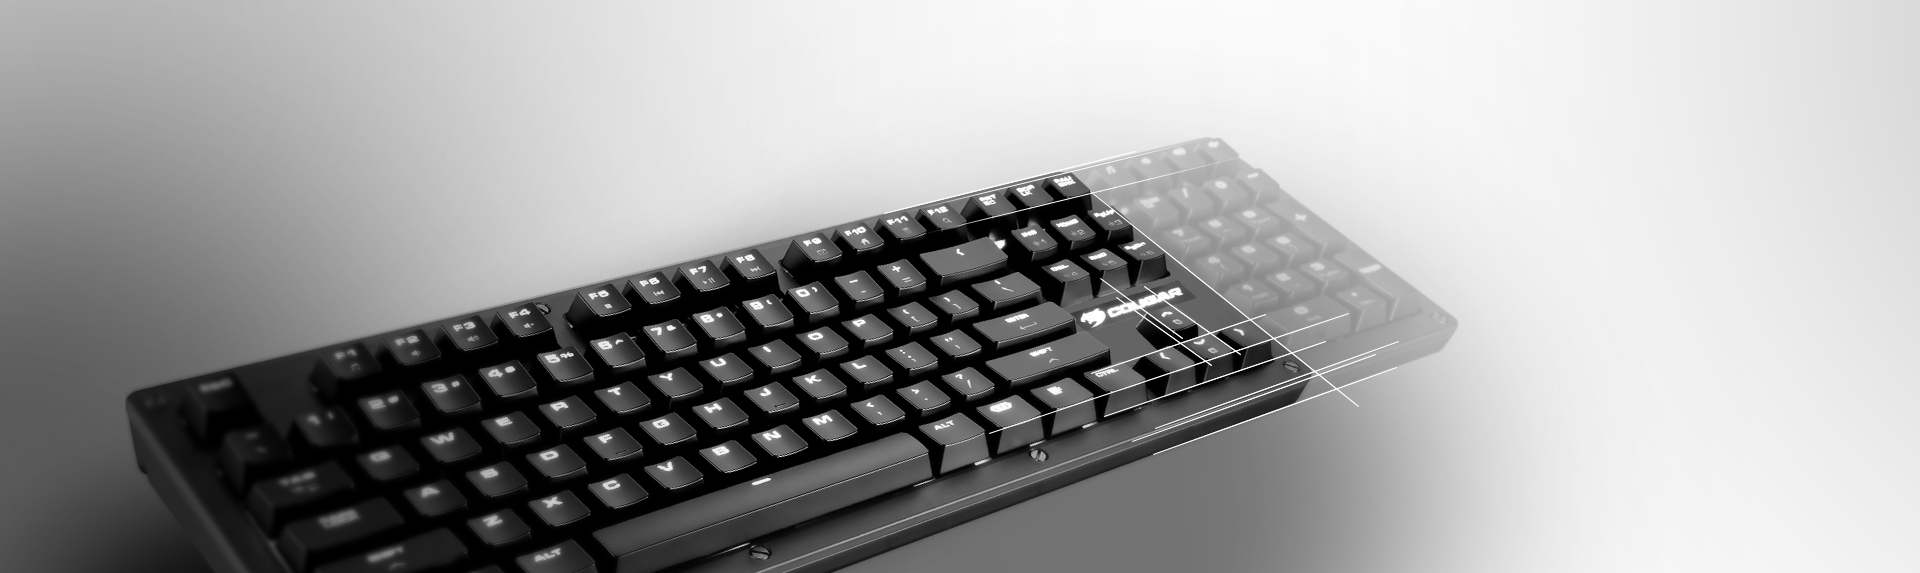 COUGAR PURI TKL - Cherry MX Mechanical Gaming Keyboard